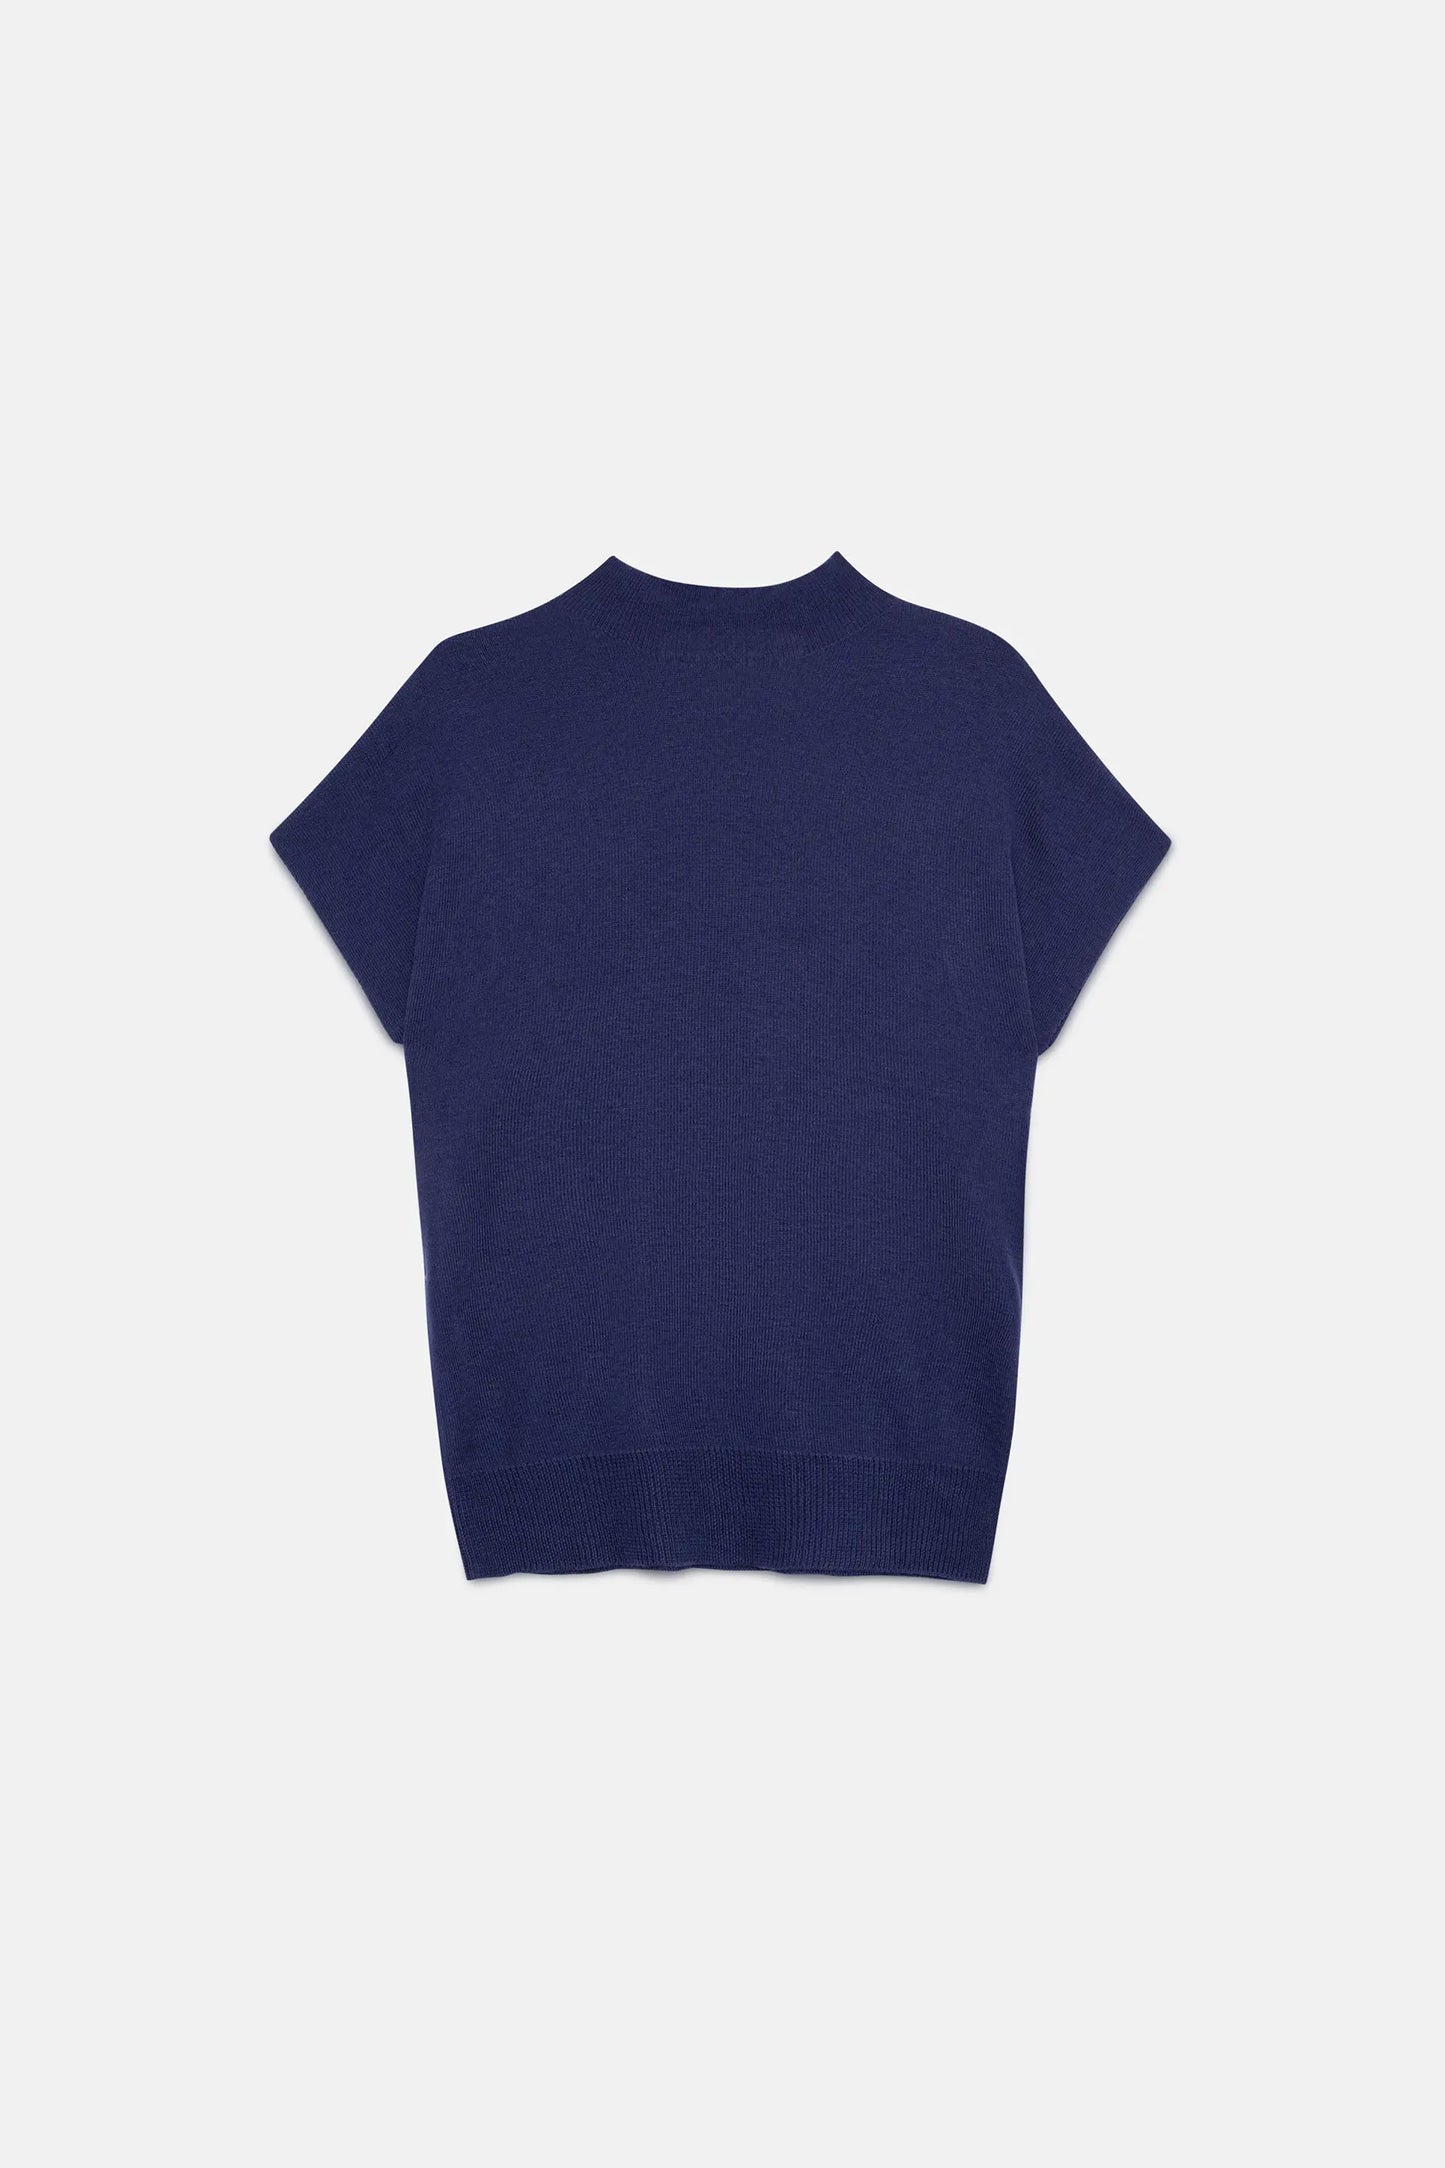 Navy blue short sleeve sweater